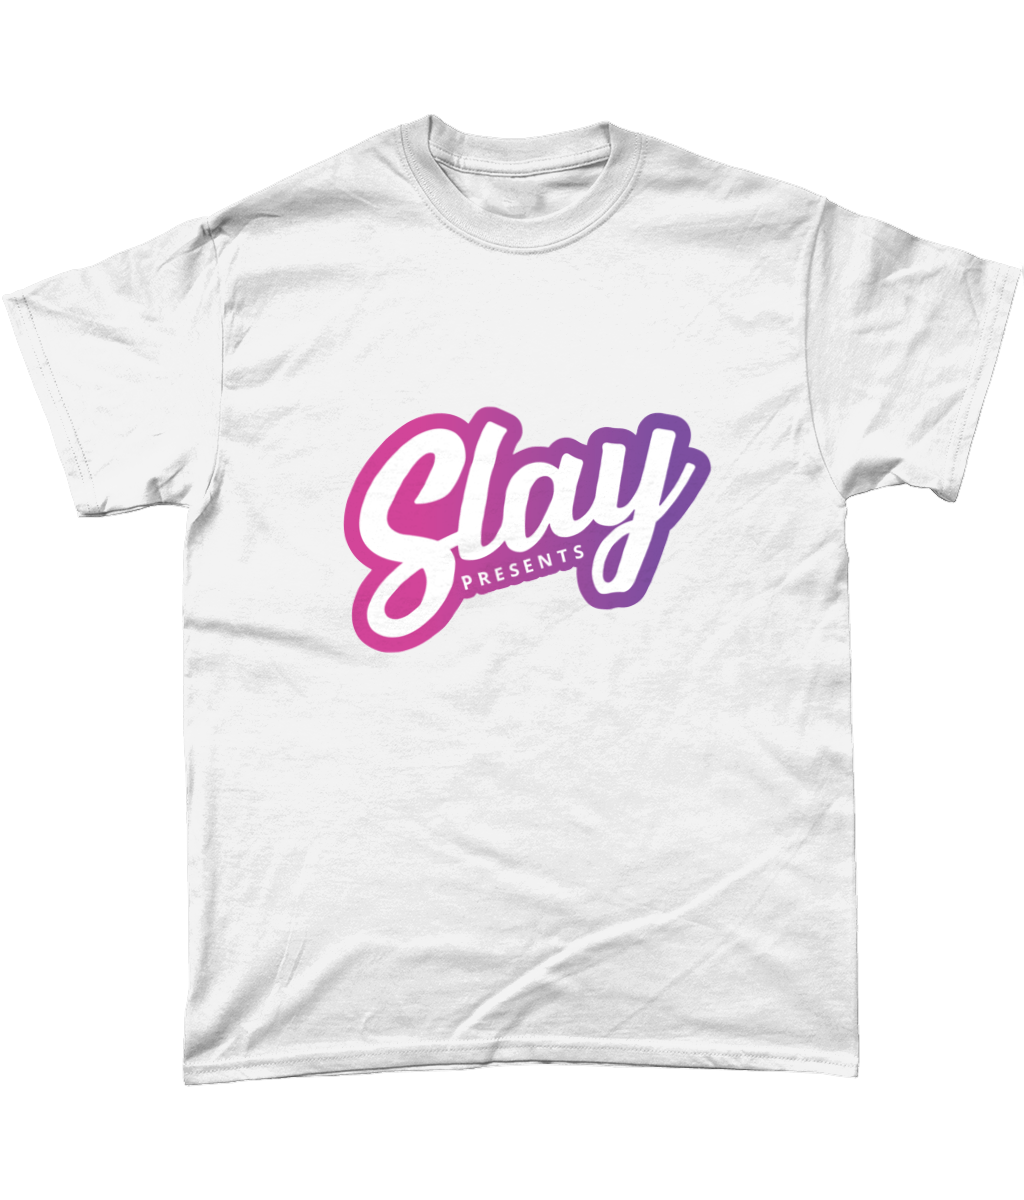 Slay! Presents T-Shirt - SNATCHED MERCH